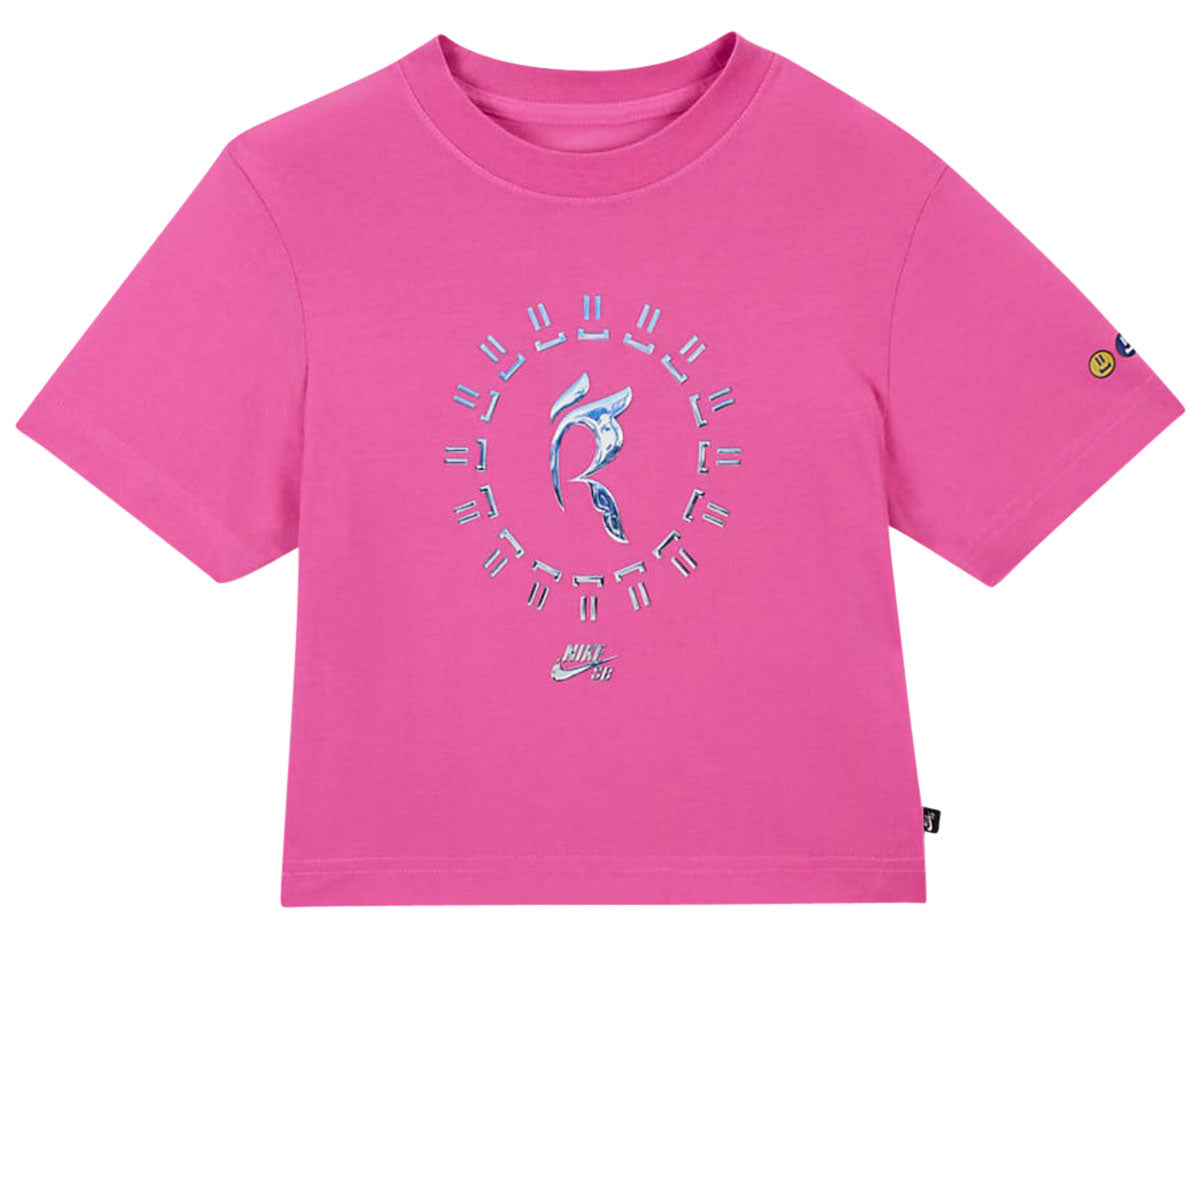 Nike SB Womens x Rayssa Leal T-Shirt - Pinkfire II image 1